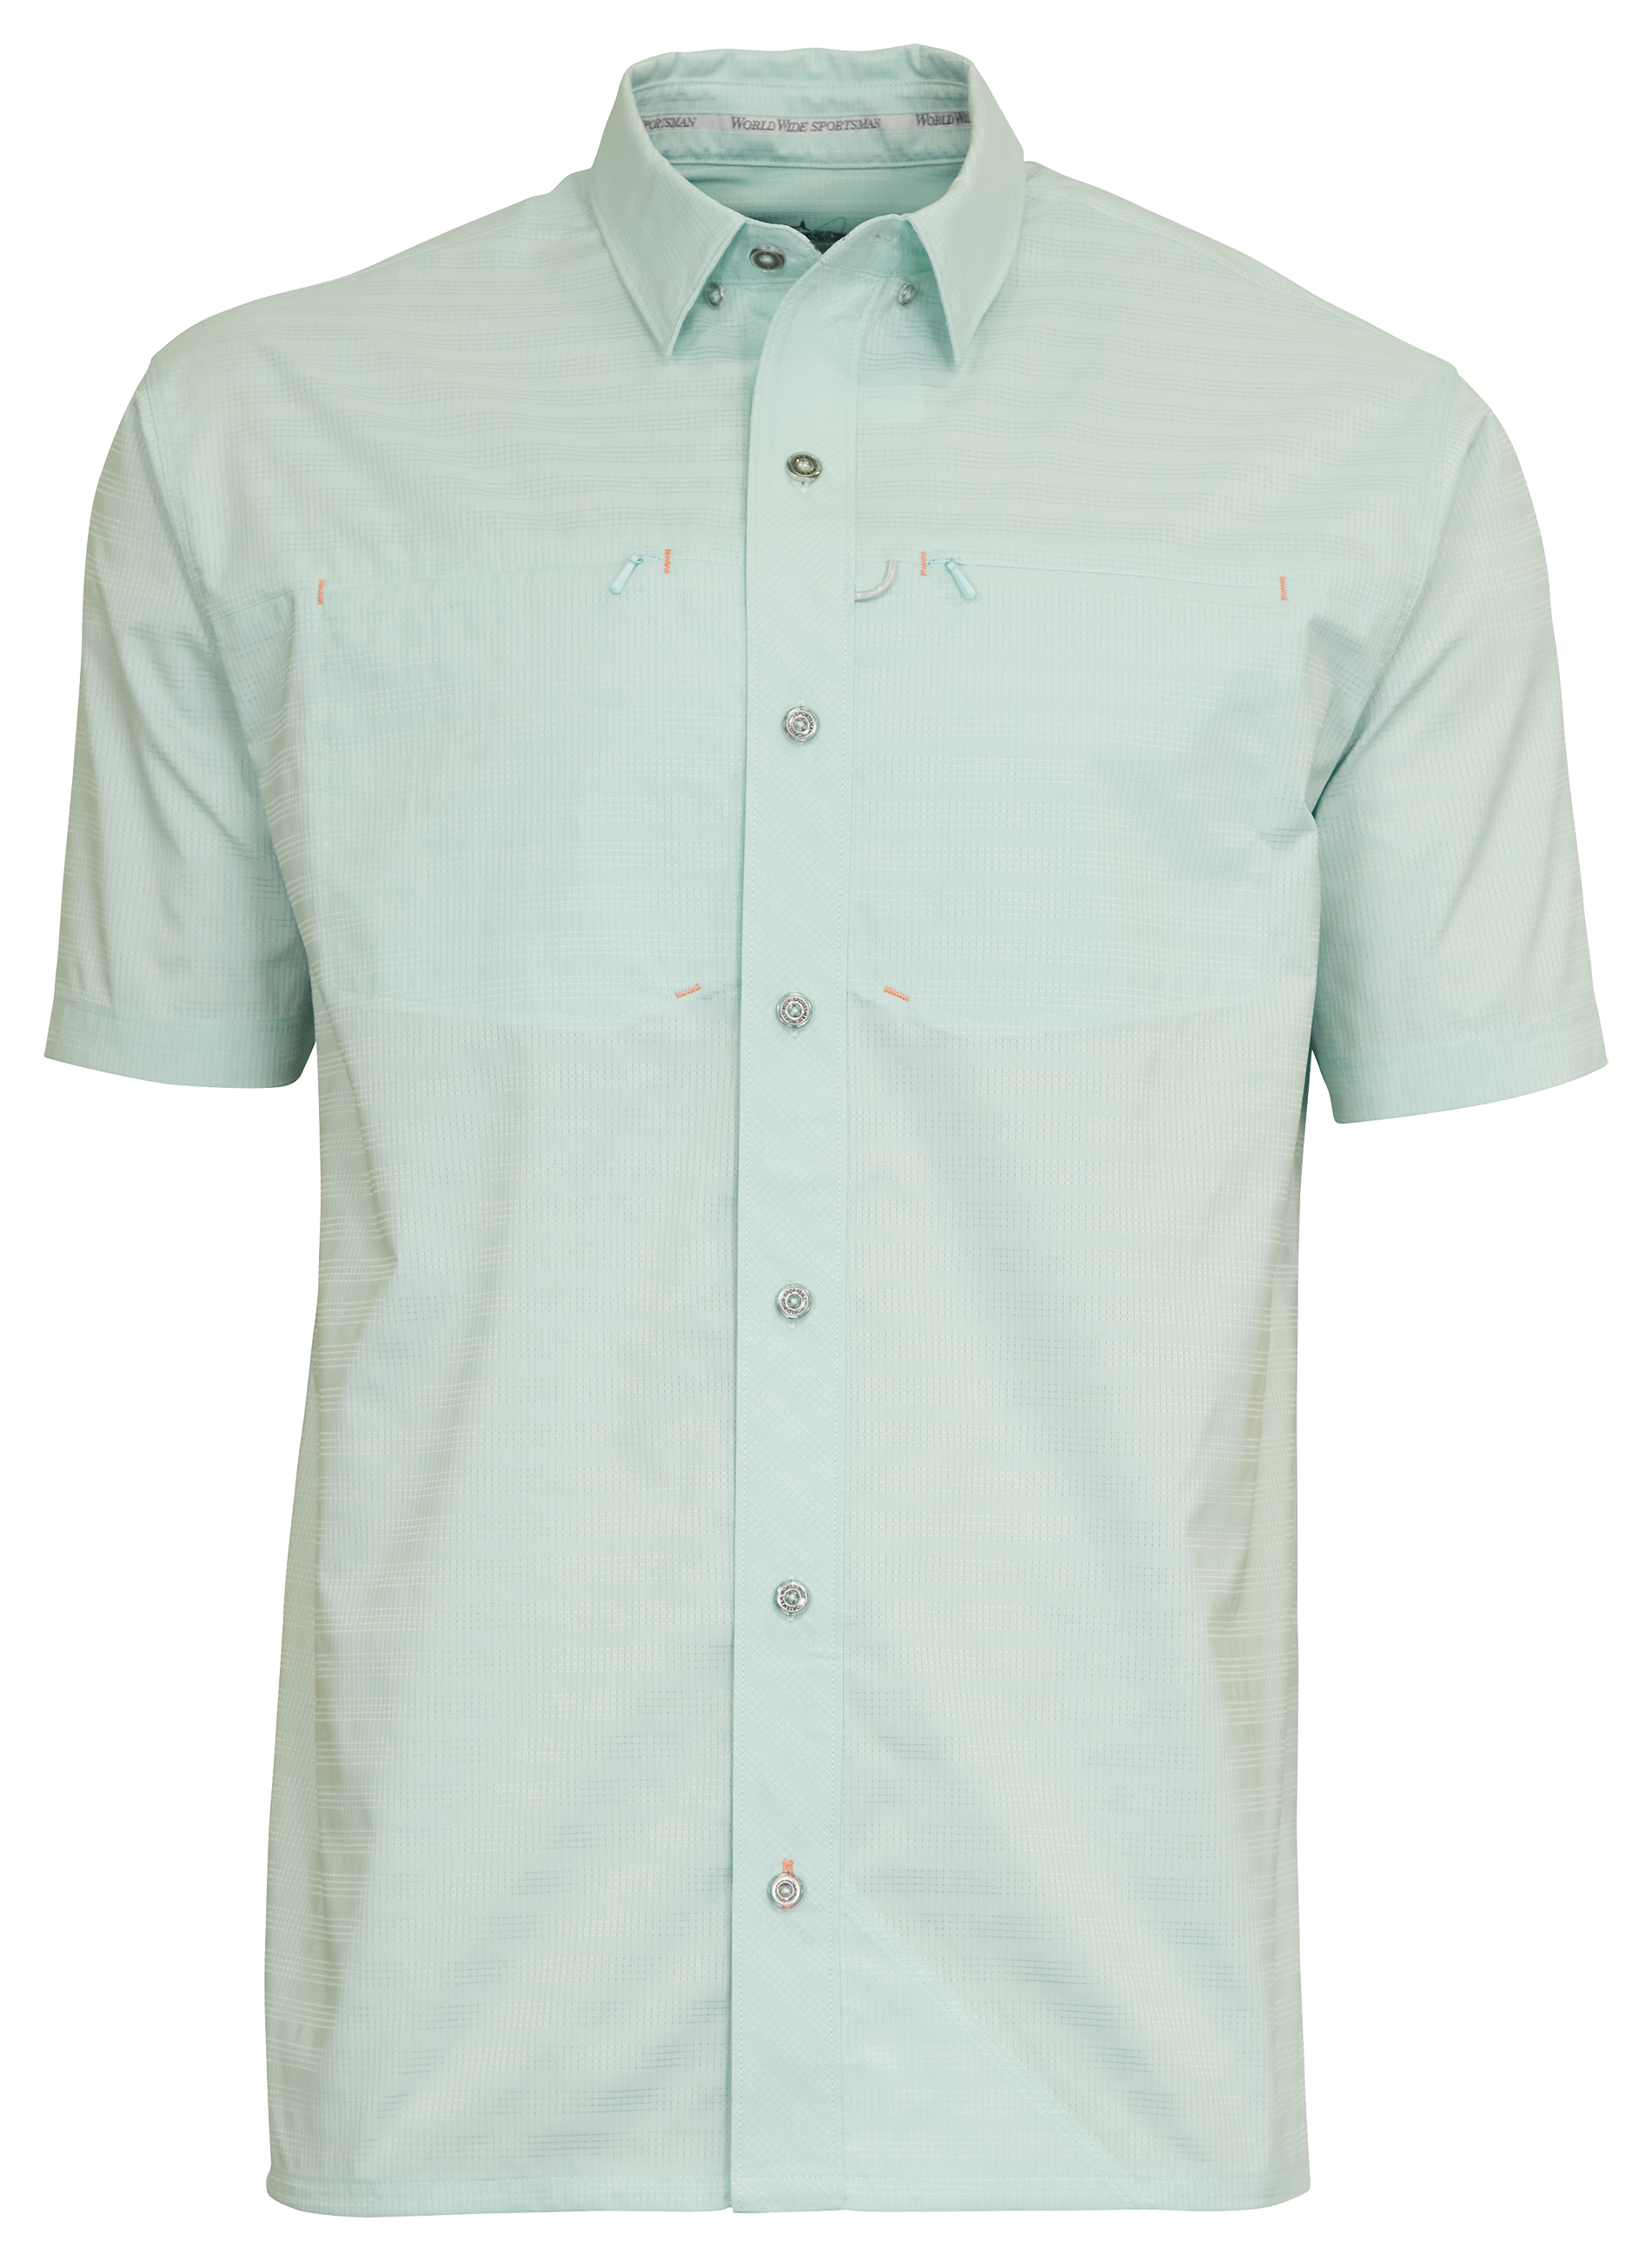 World Wide Sportsman Seacrest 2-Pocket Short-Sleeve Button-Down Shirt for Men - Harbor Gray - XL